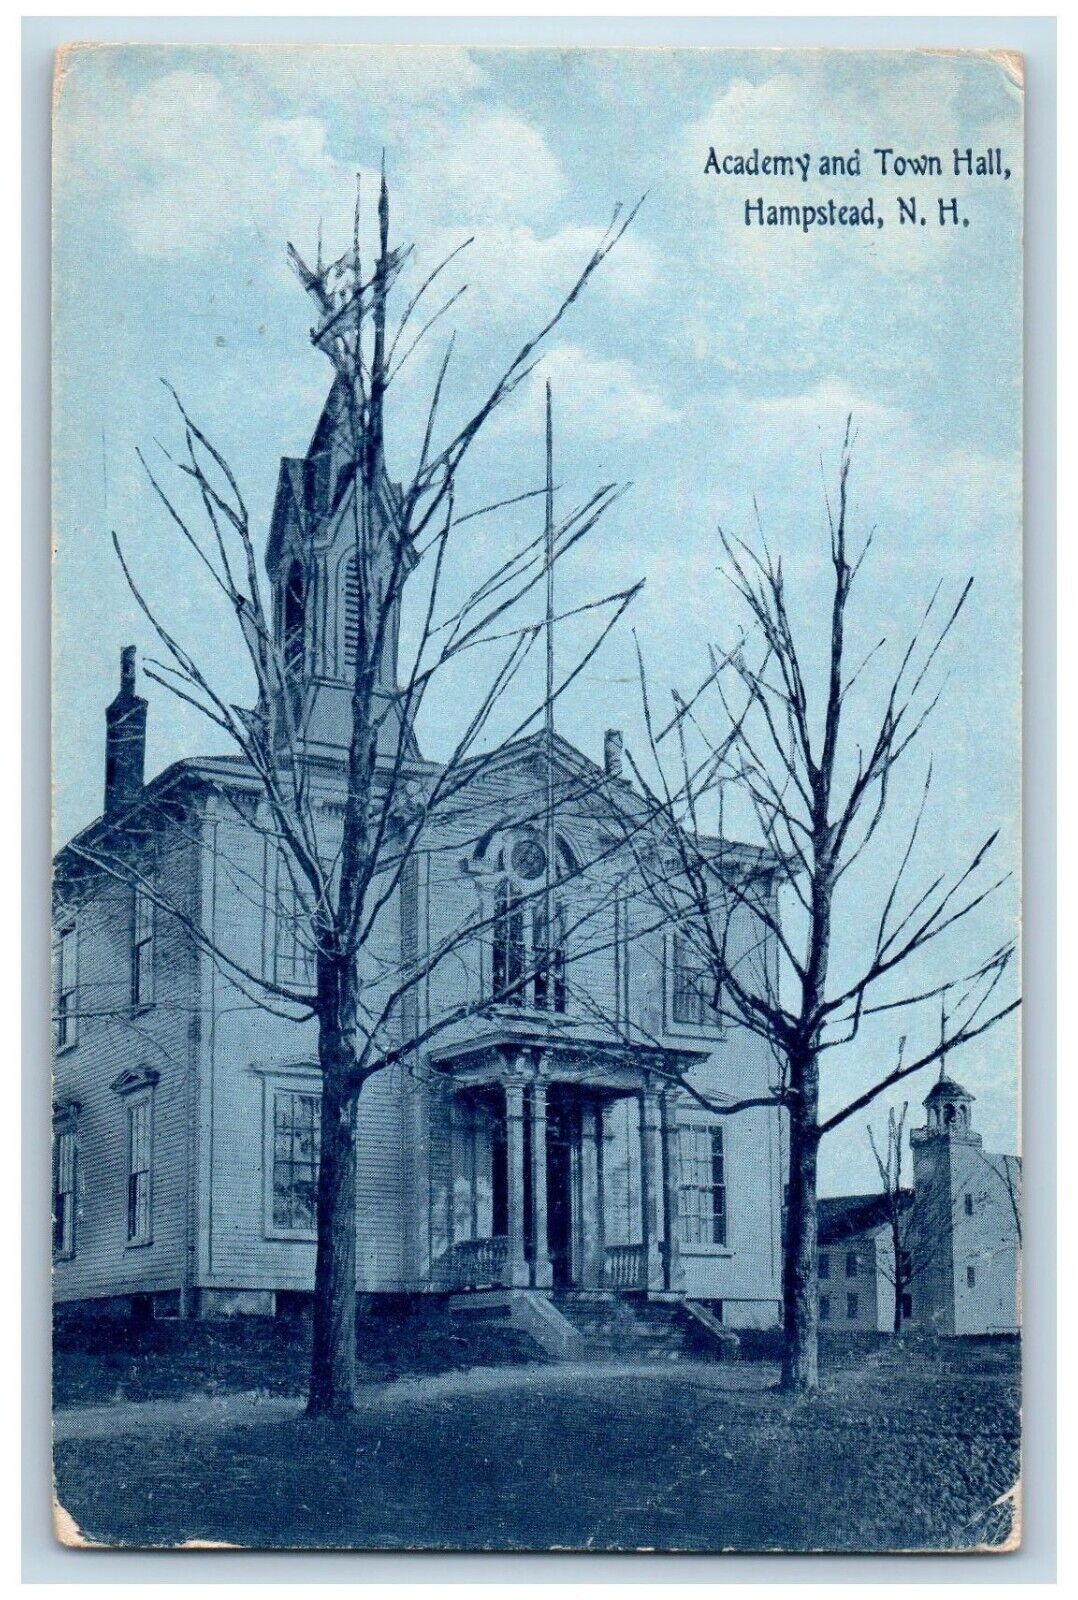 Hampstead New Hampshire Postcard Academy Town Hall Exterior 1910 Vintage Antique